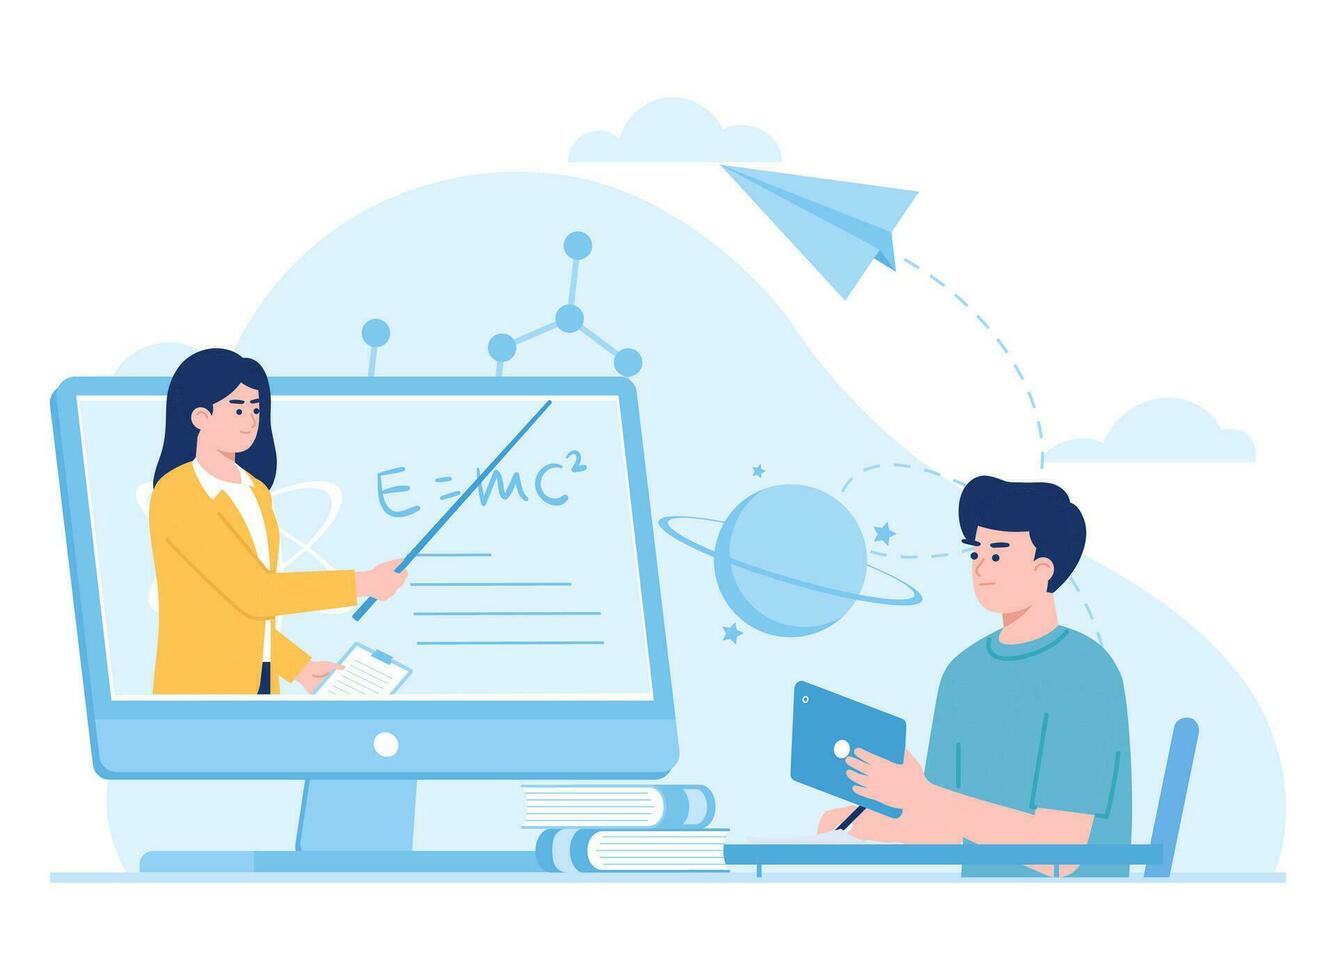 man studying mathematics via the internet concept flat illustration vector